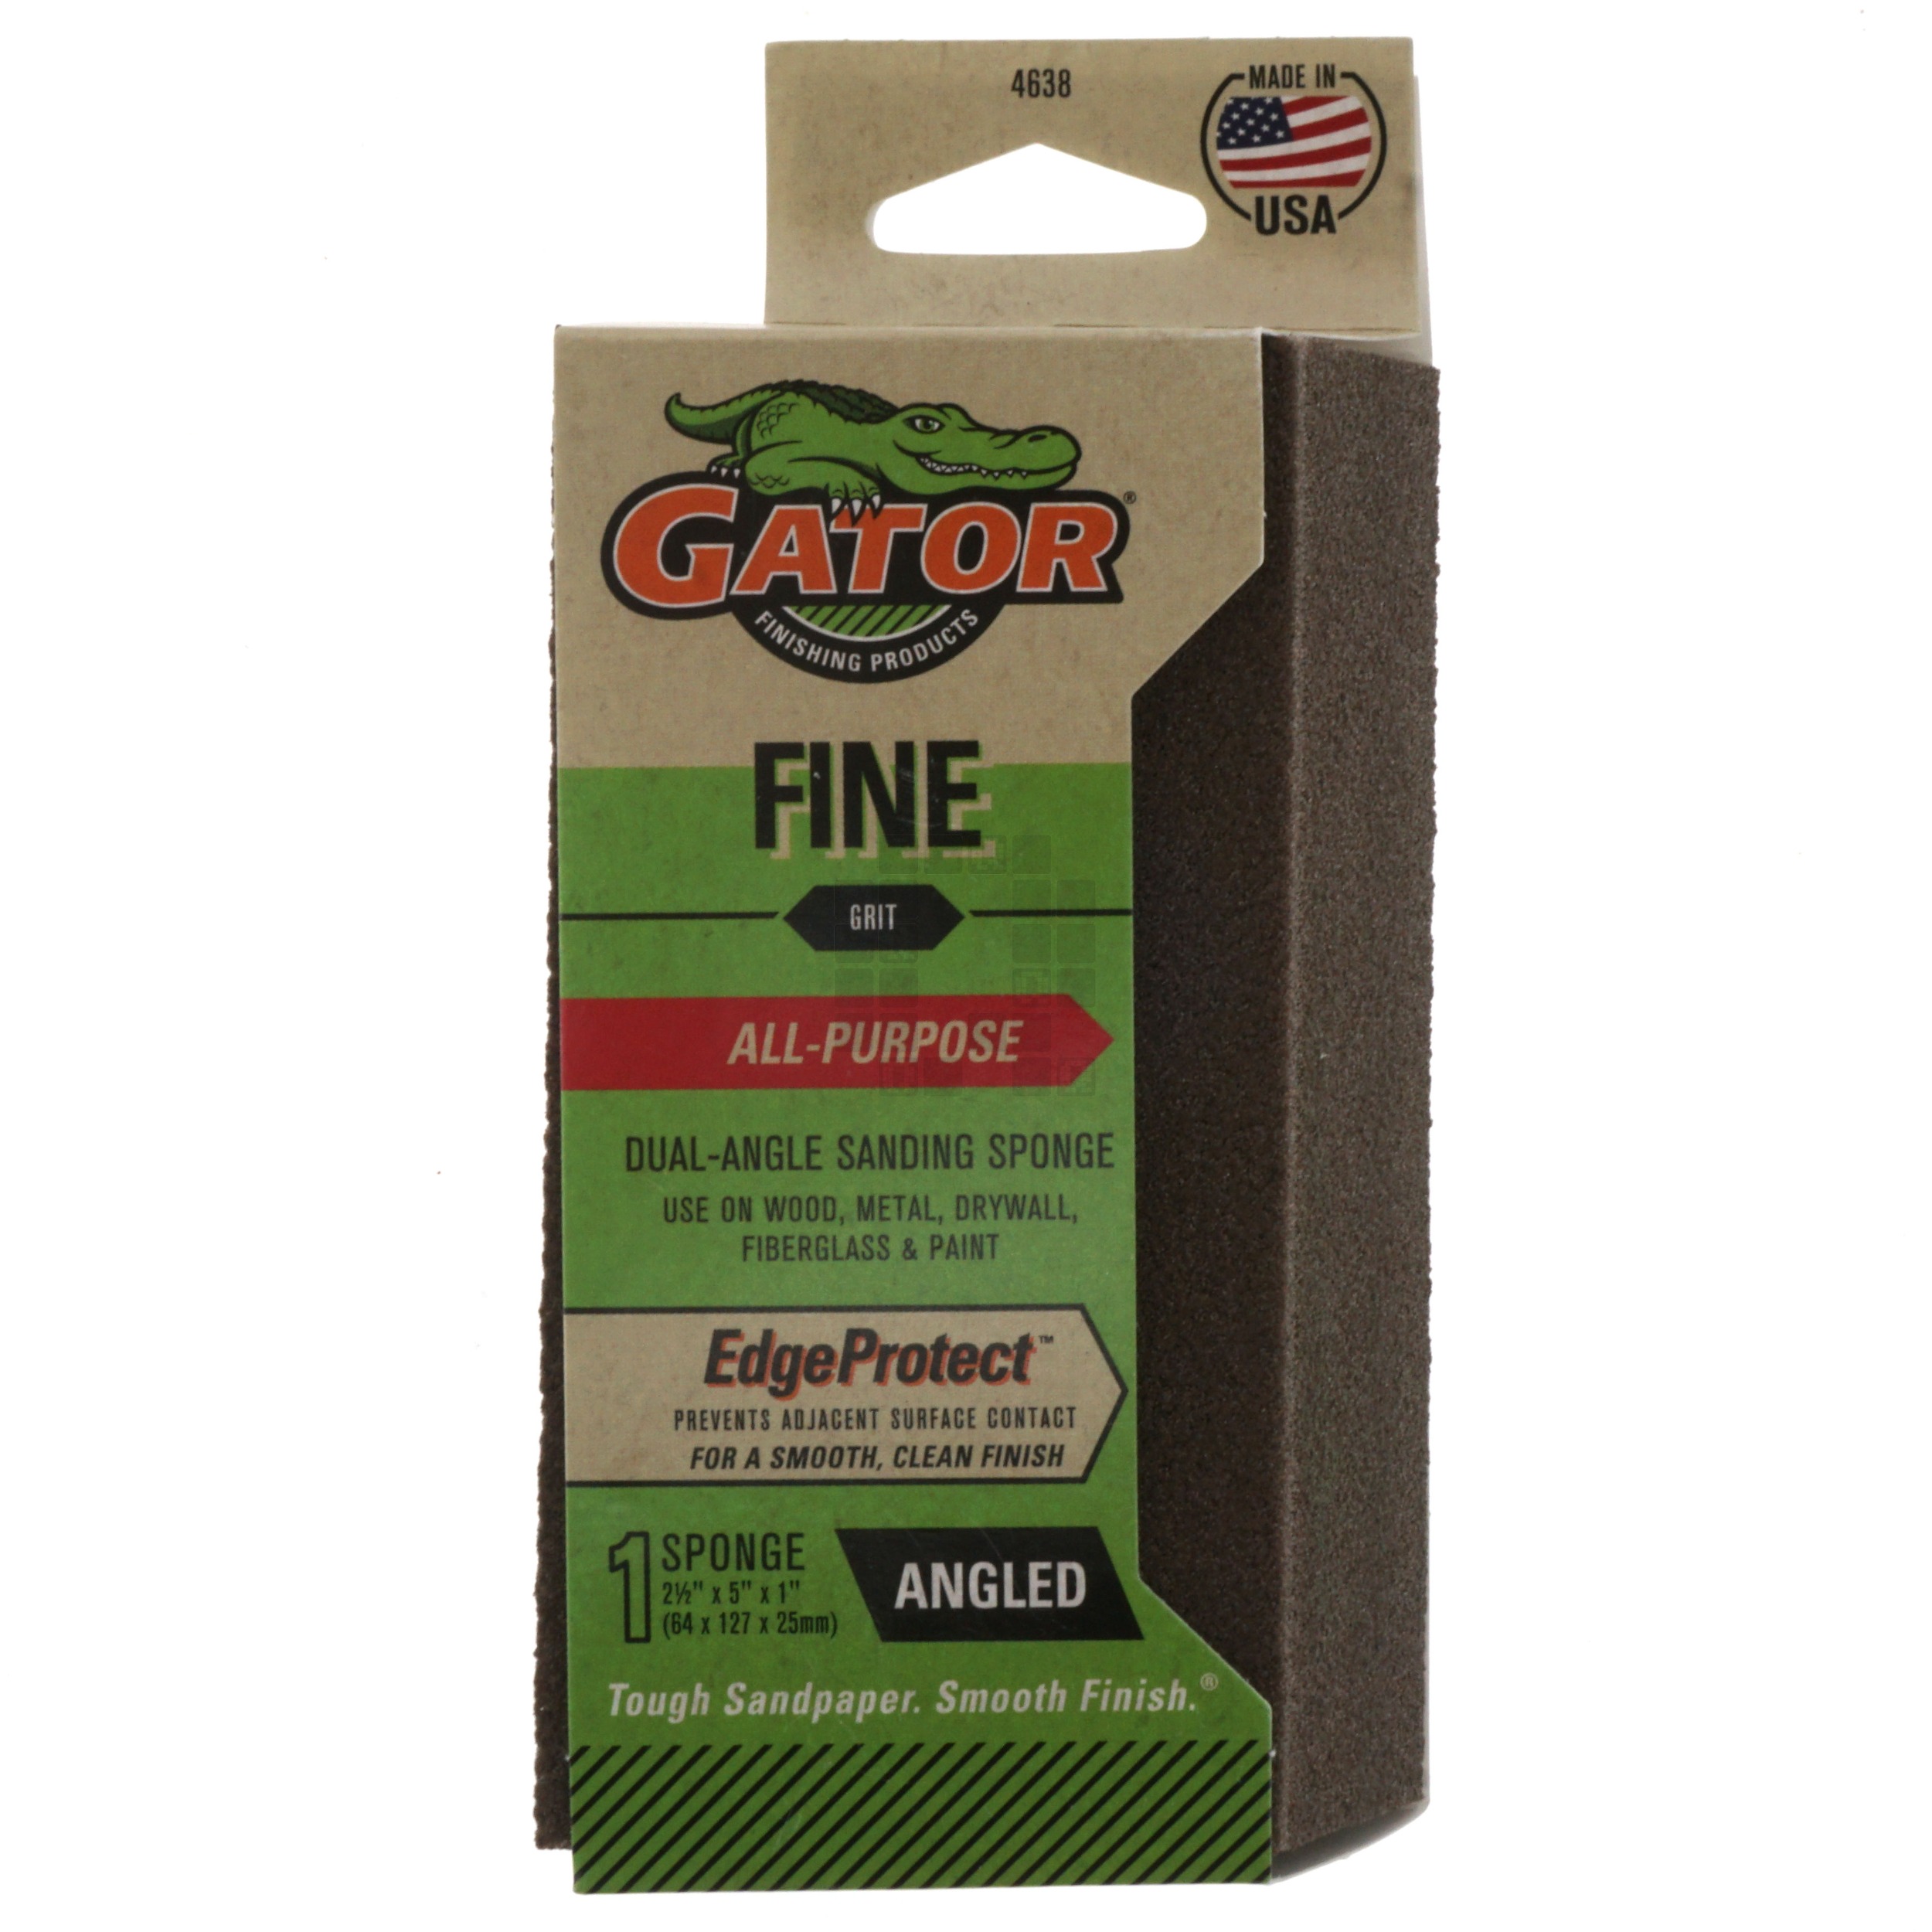 Gator 4638 All-Purpose EdgeProtect Dual-Angle Sanding Sponge, Fine Grit